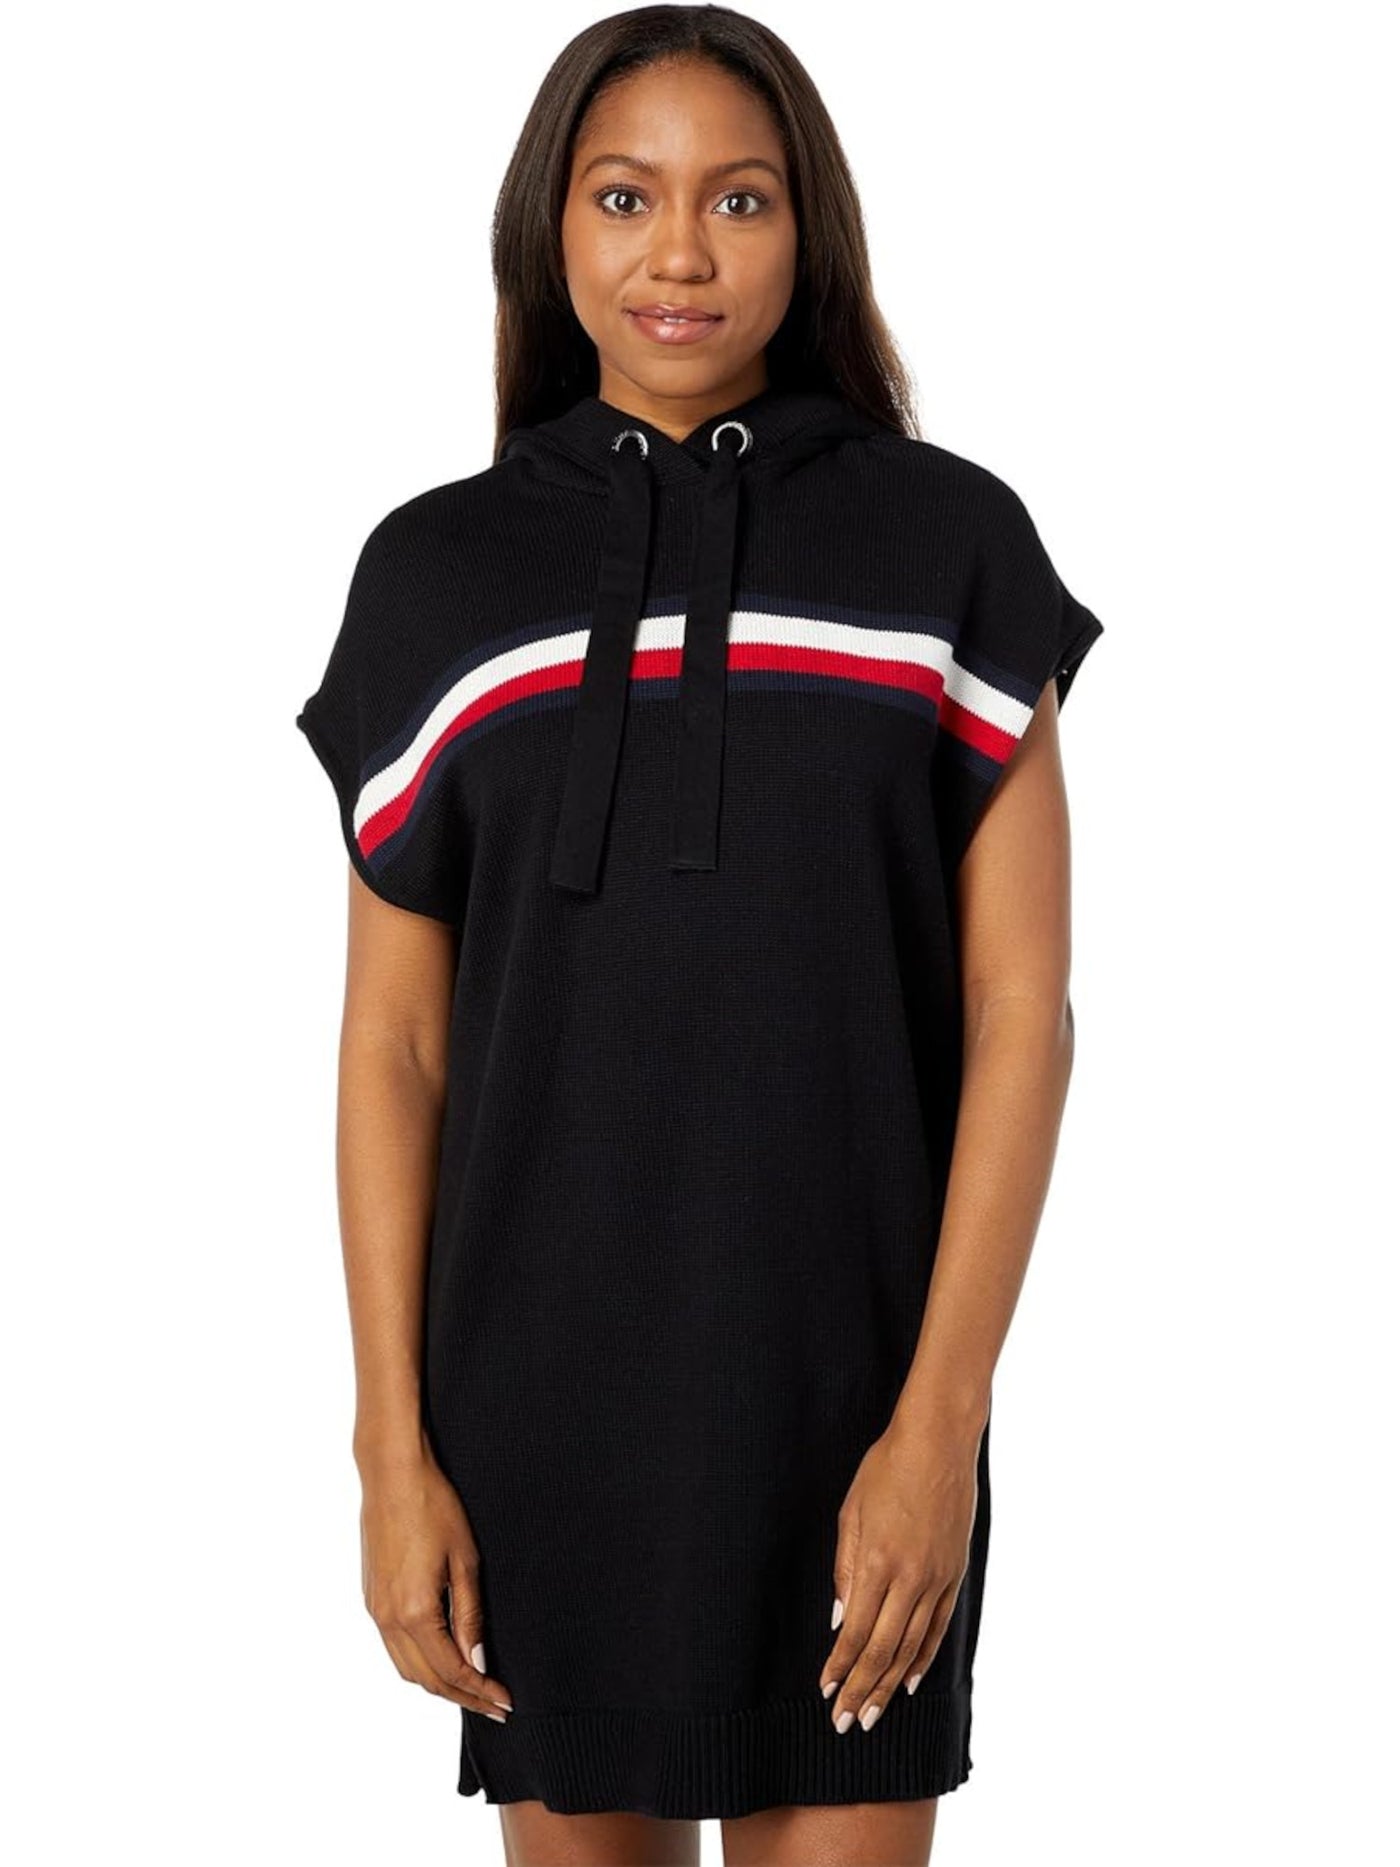 TOMMY HILFIGER Womens Black Striped Cap Sleeve Crew Neck Short Sweater Dress L